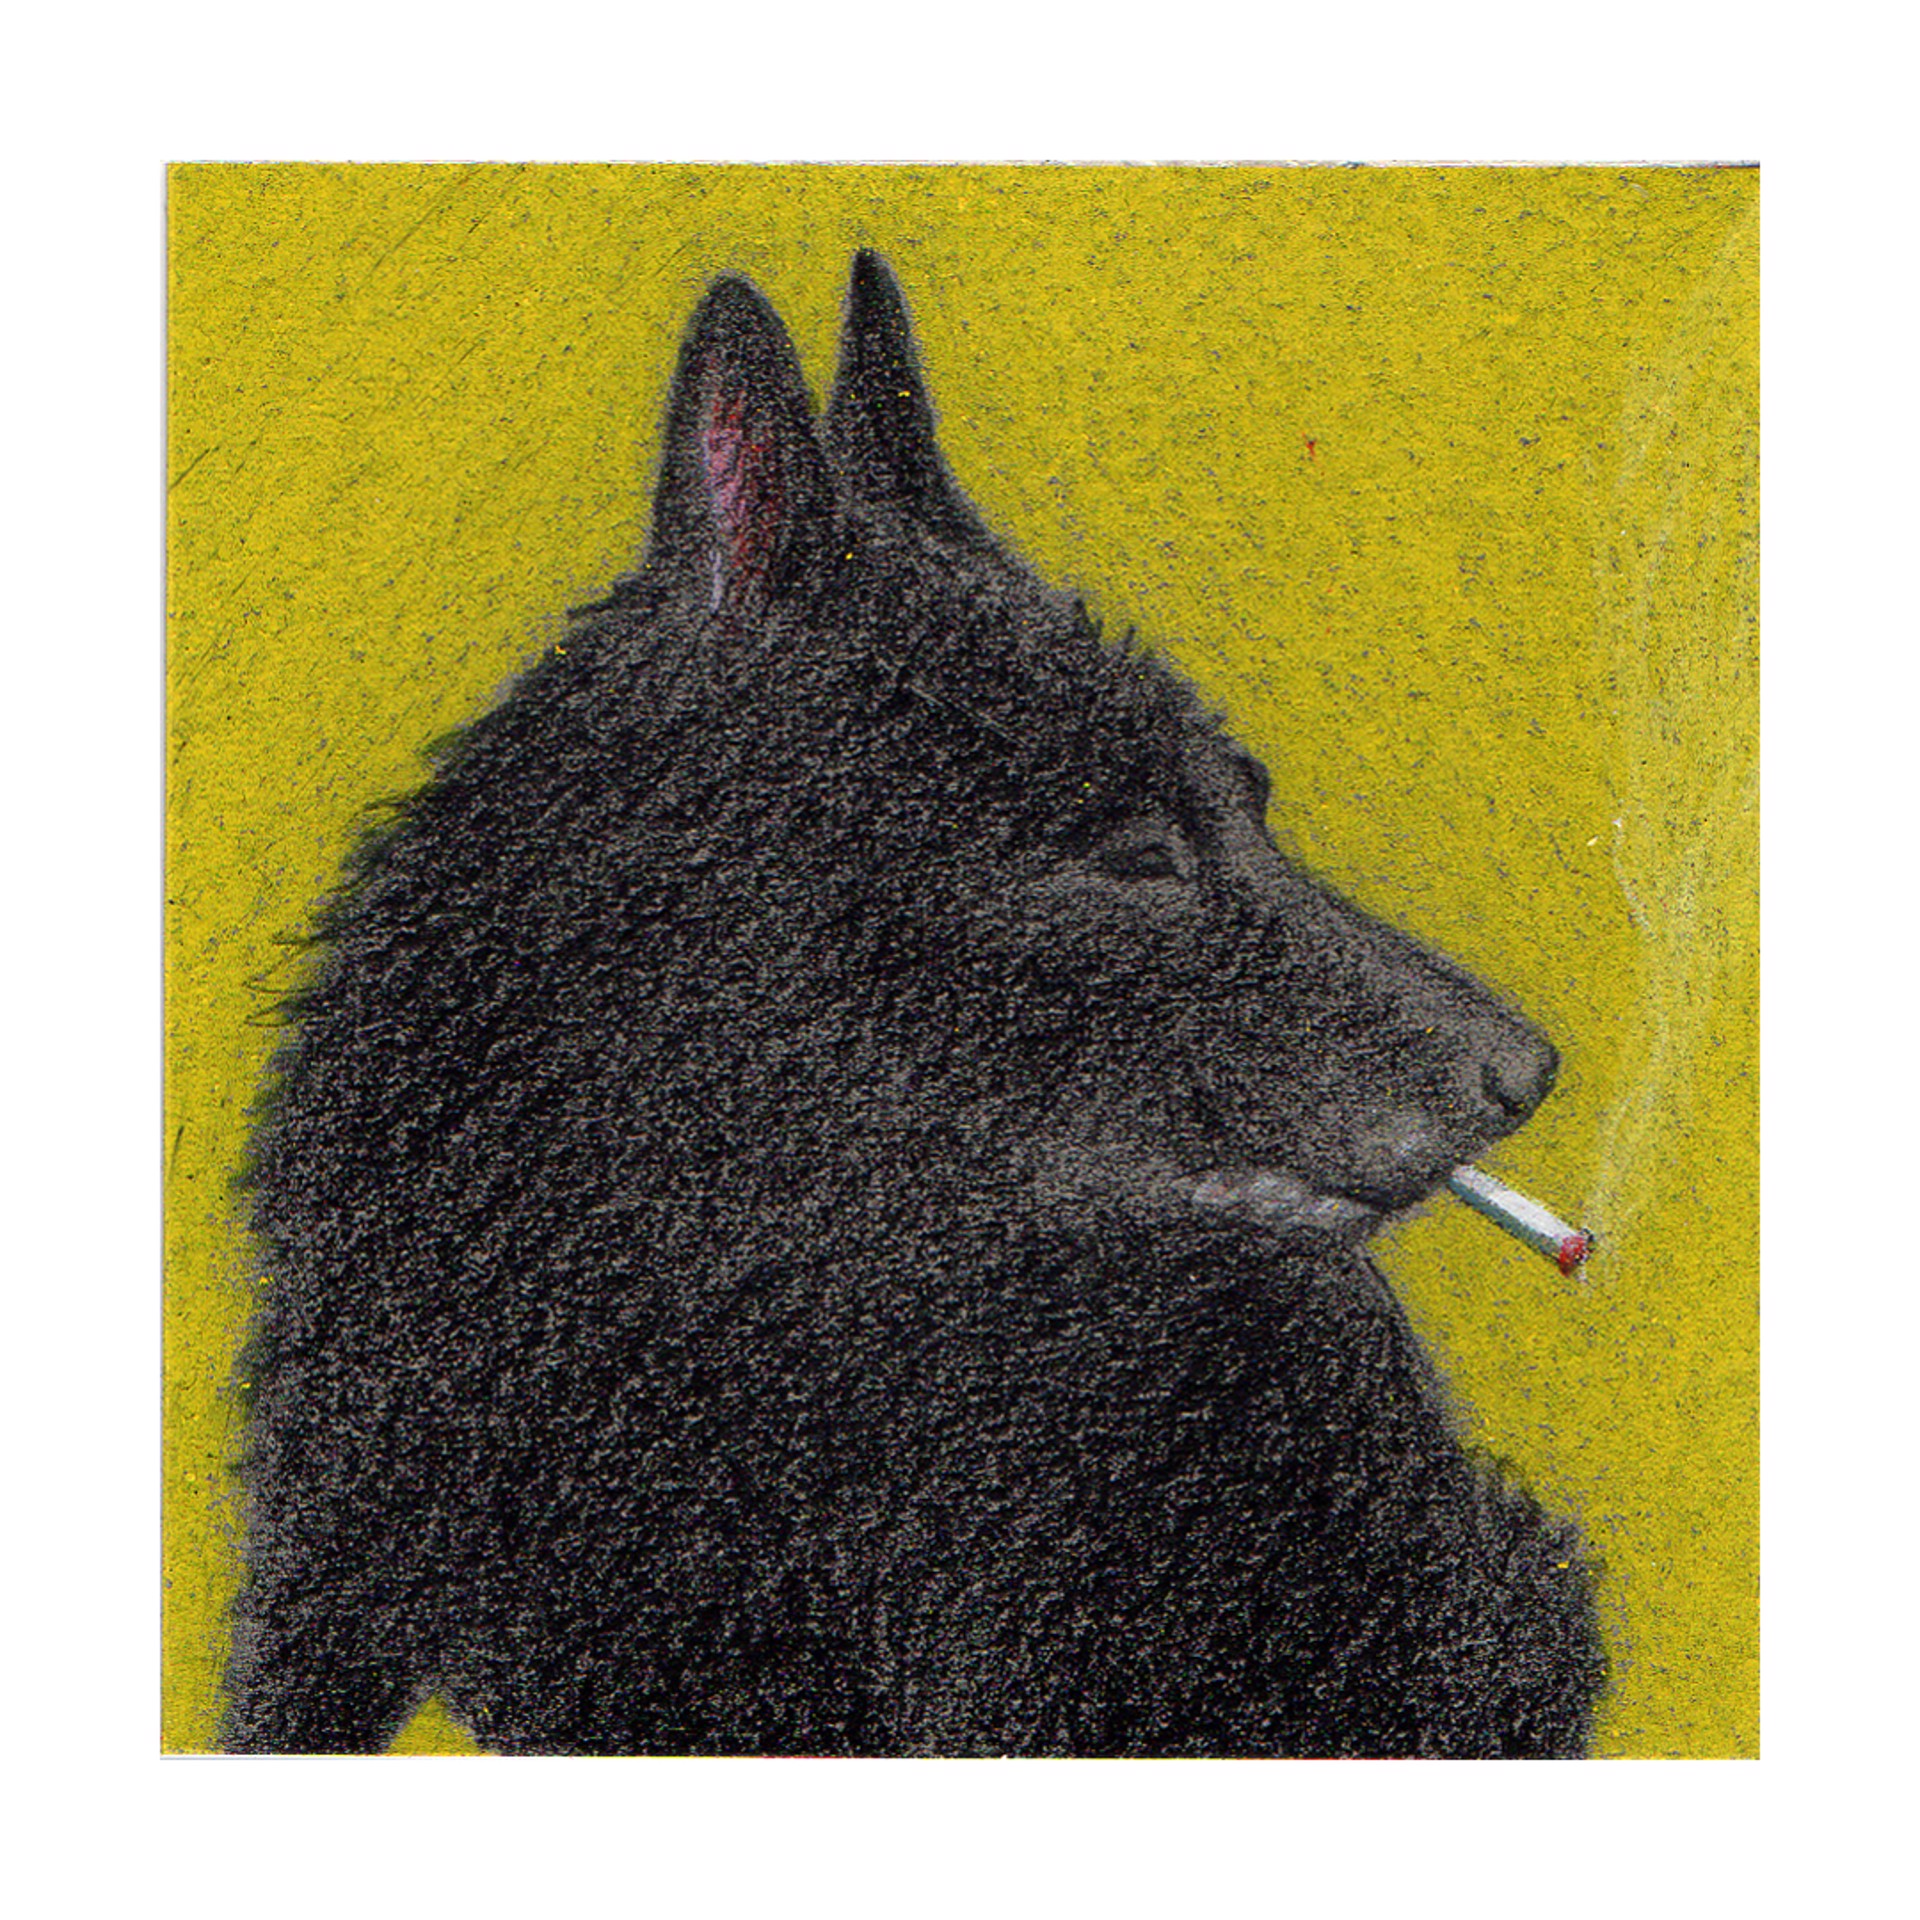 Dog Smoking a Cigarette #2 by Neva Mikulicz